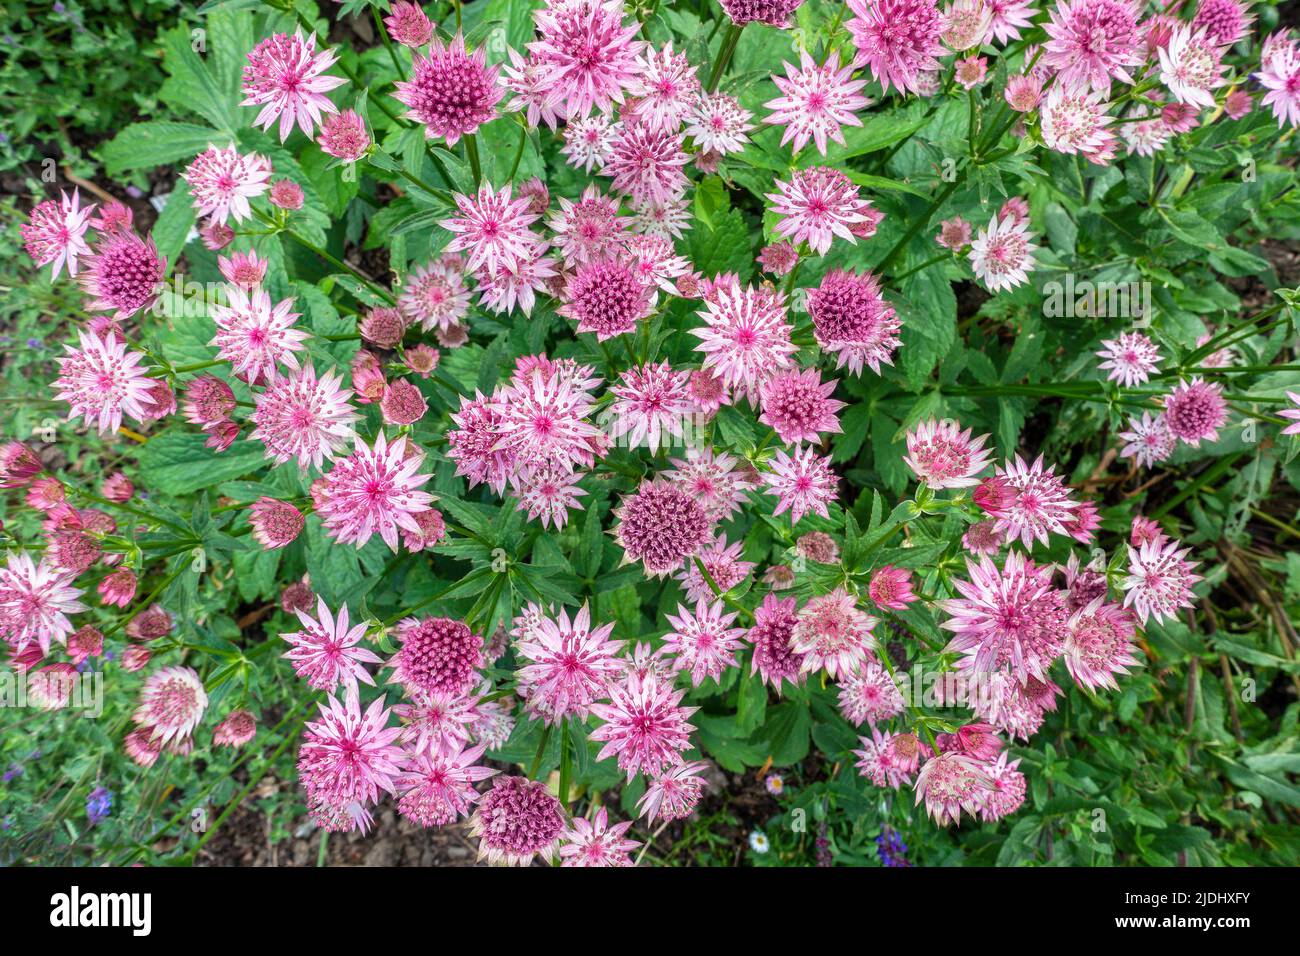 Astrantia,Major,British Native,Pink flower Stock Photo